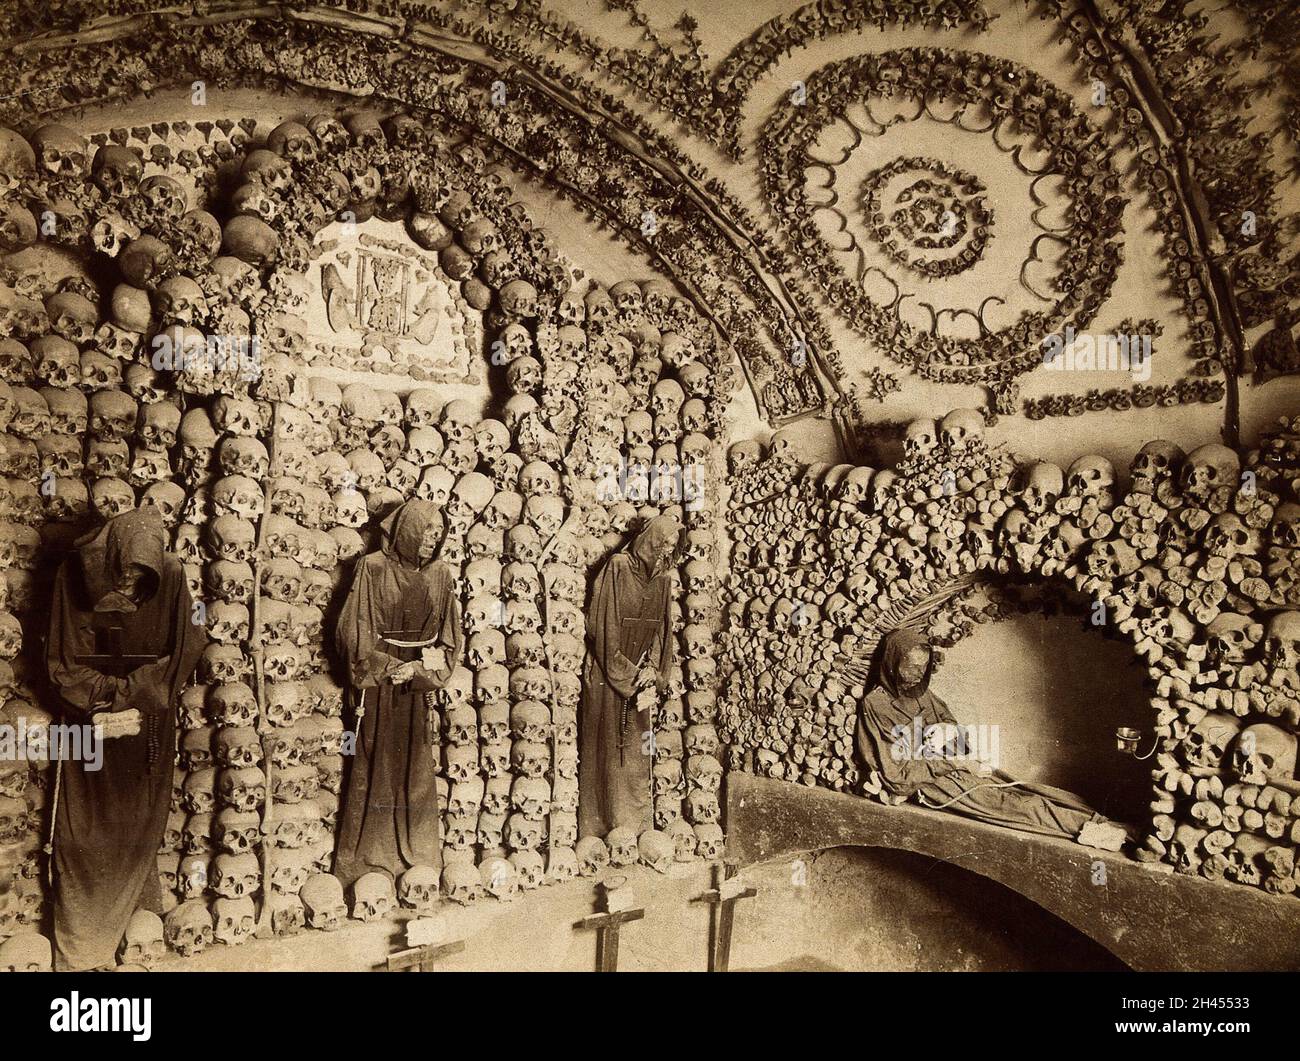 Santa Maria della Concezione, Rome: skulls and skeletons of the friars arranged in arches and columns around the walls of the Convento dei Cappuccini. Photograph. Stock Photo